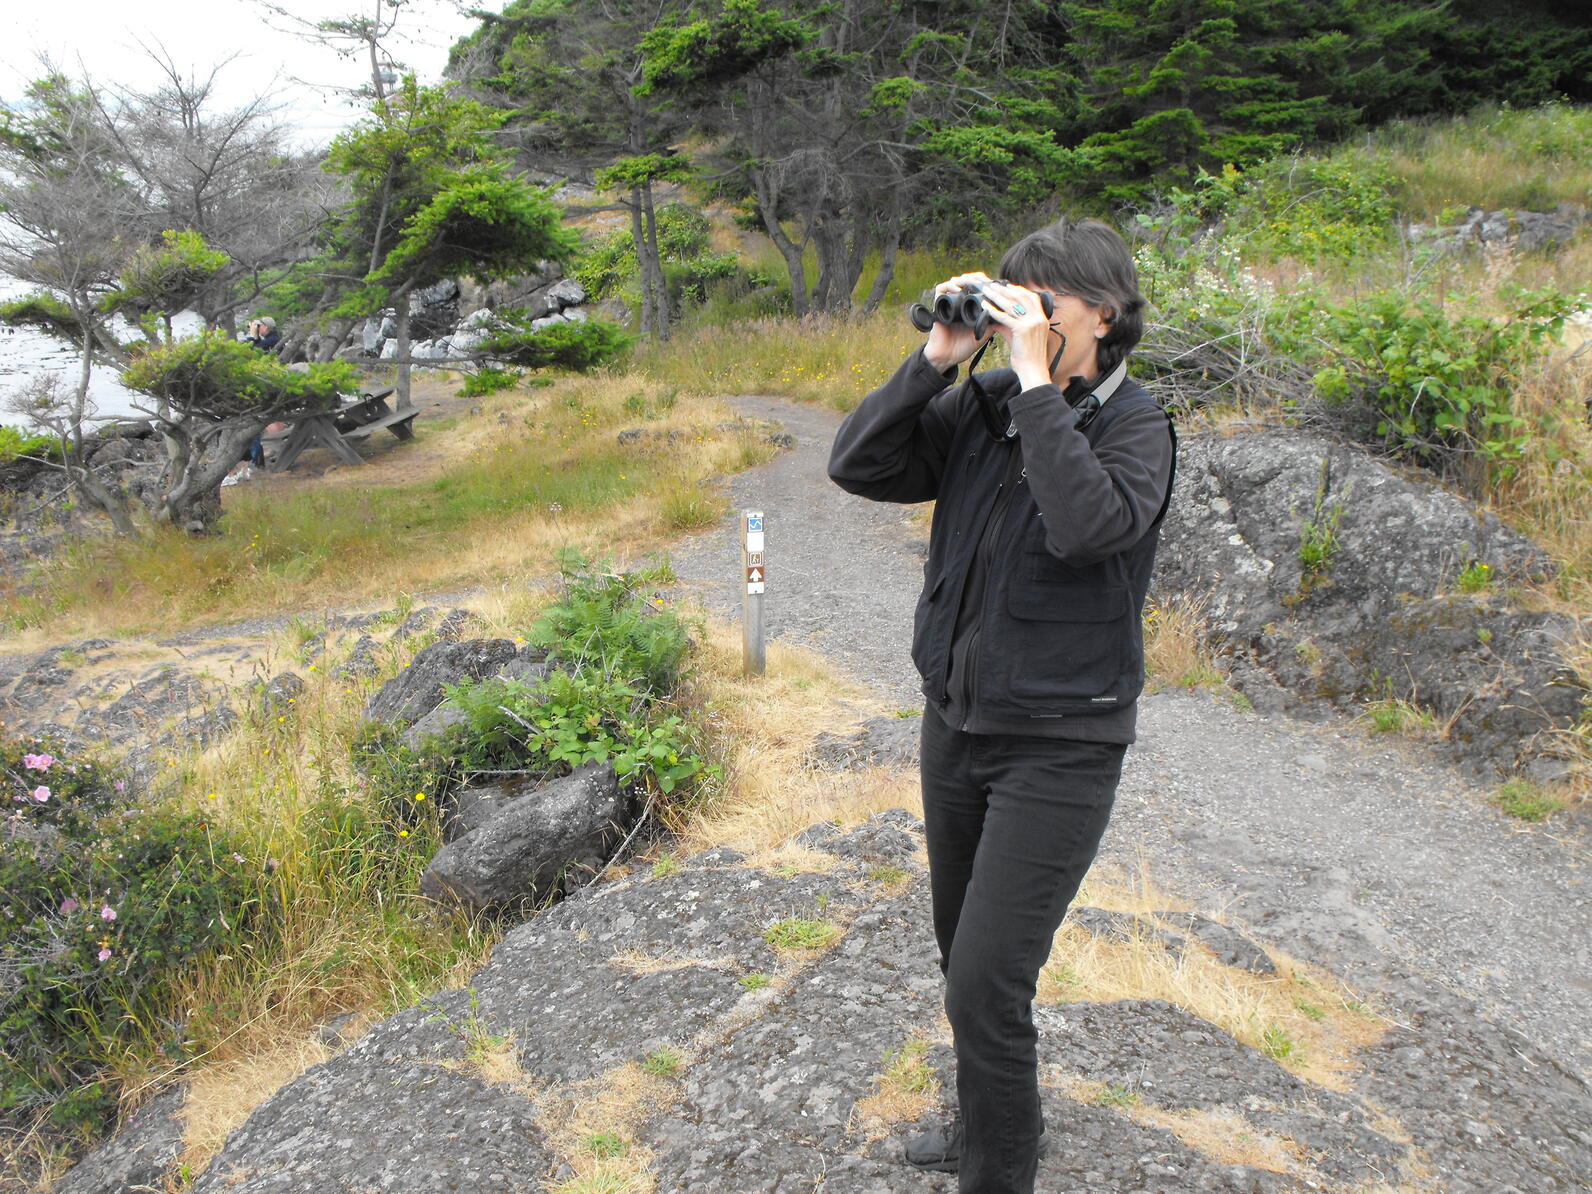 A person looking through binoculars in the San Juan islands.